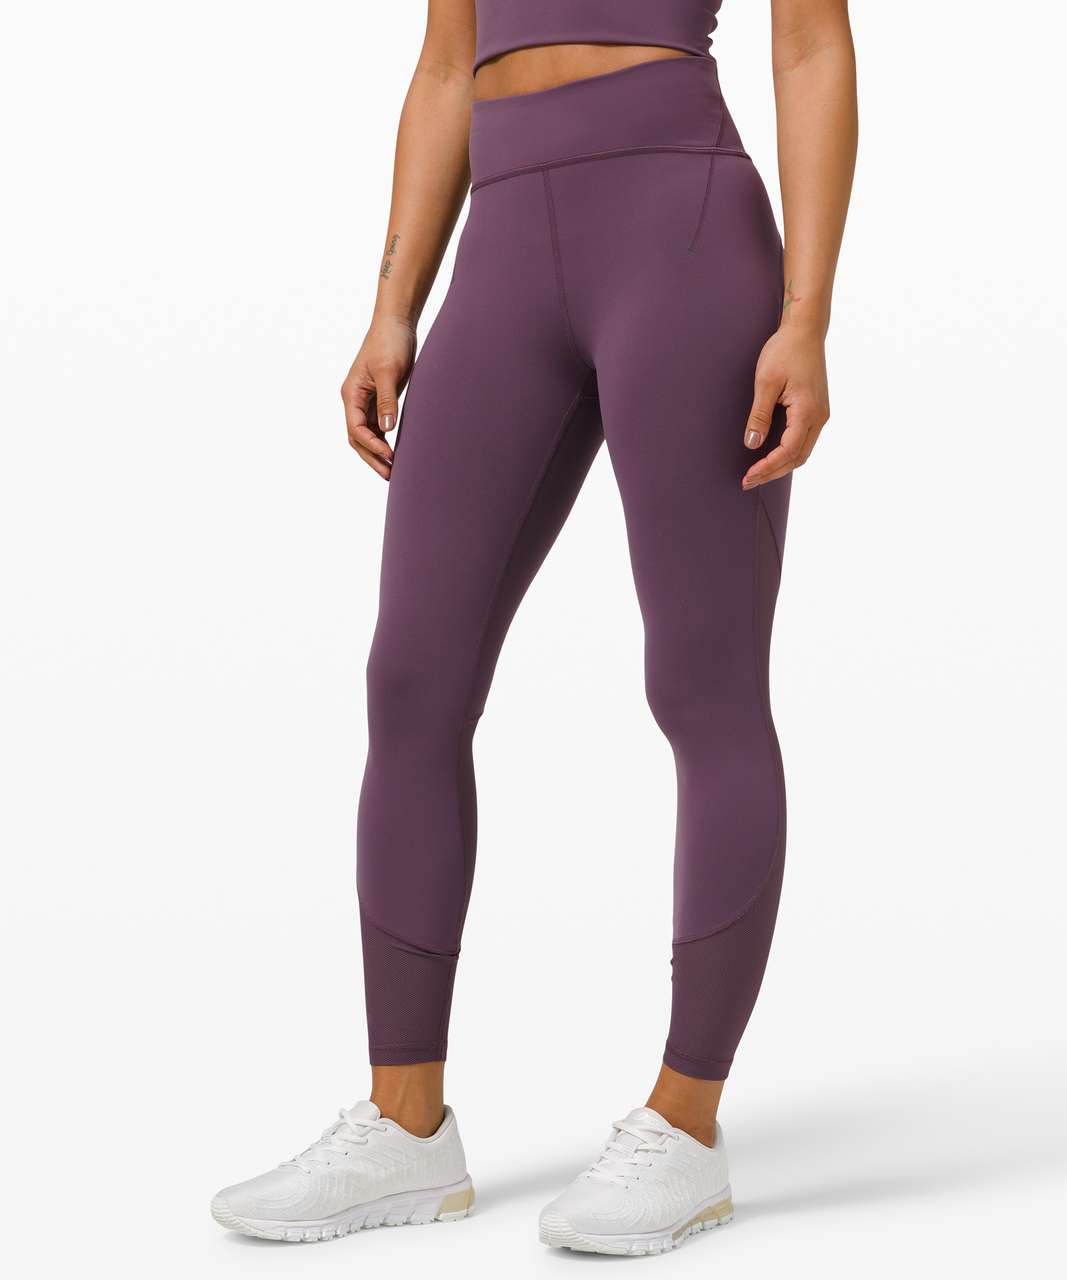 lululemon leggings size 8 purple mesh - Depop